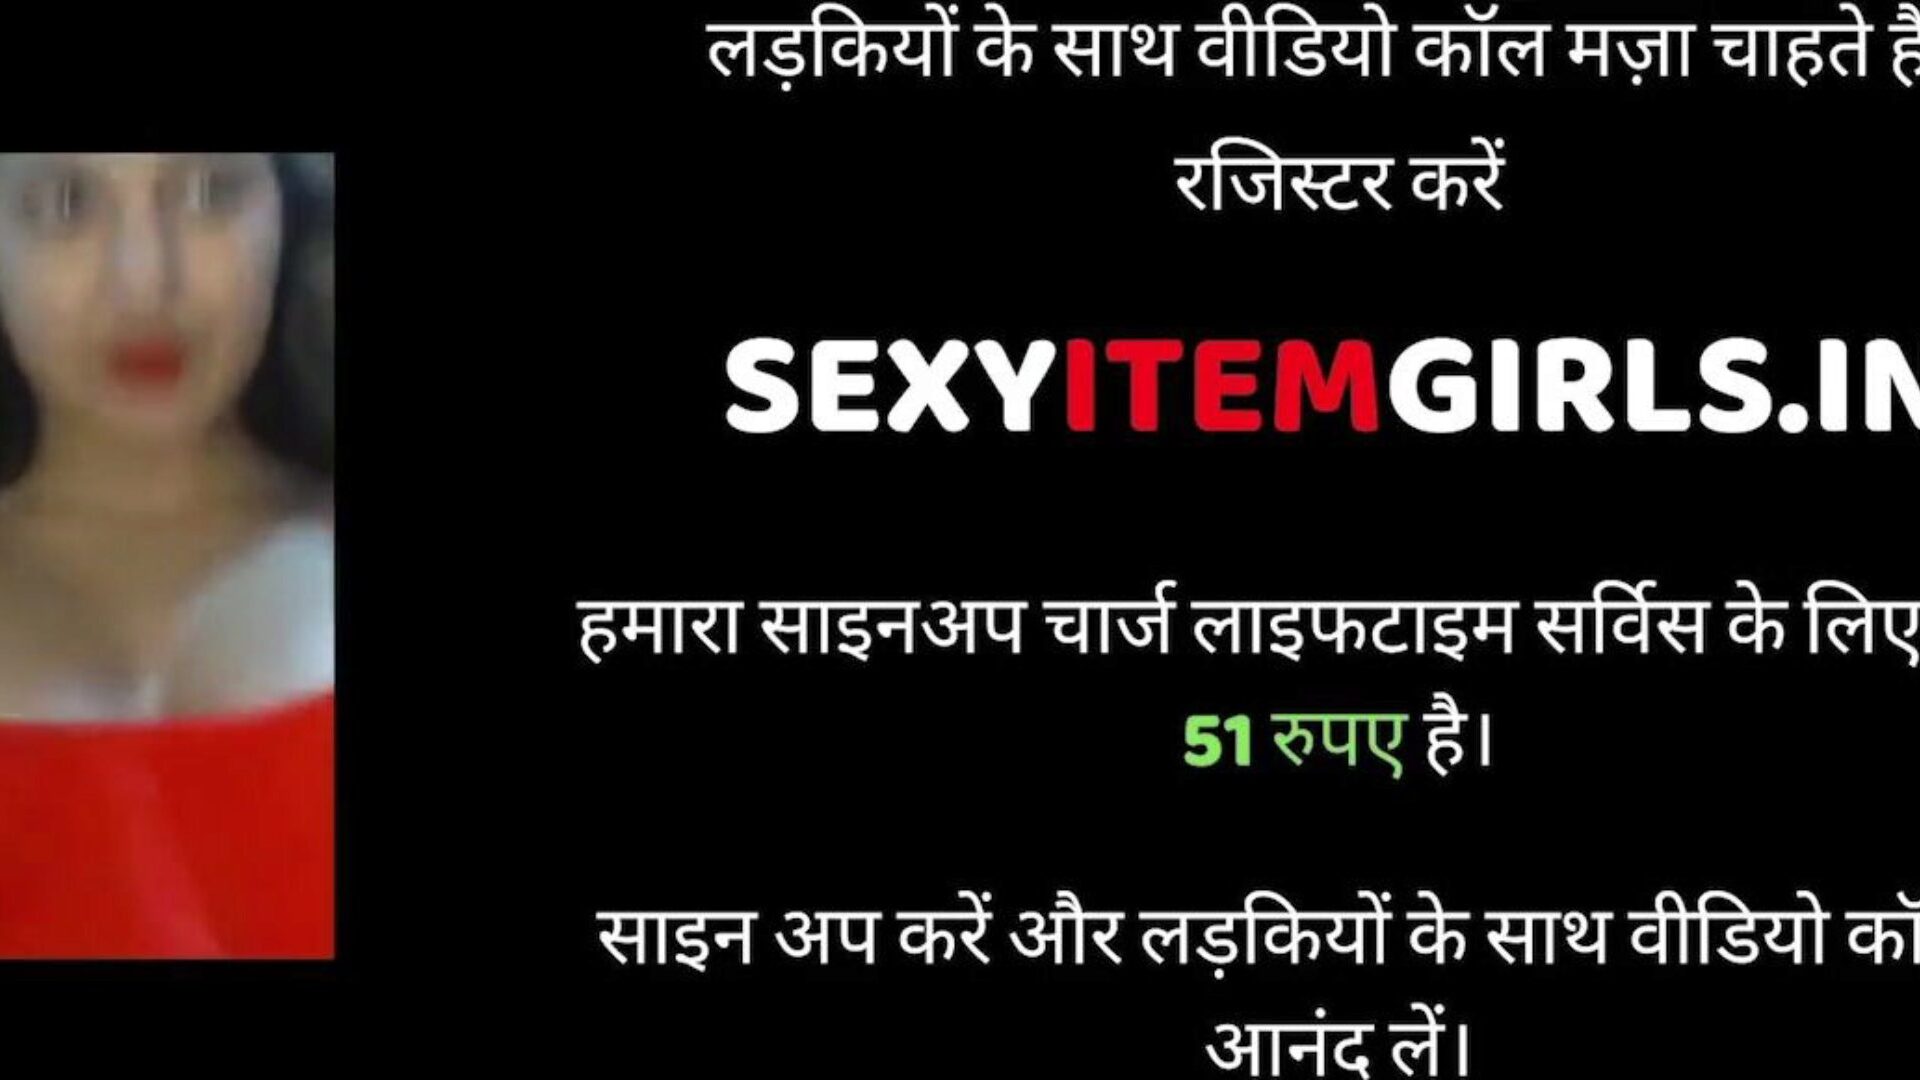 sexo indio de marido y mujer, sexo gratis xnxx porn 95: xhamster mira el vídeo de sexo indio de marido y mujer en xhamster, el sitio de tubo de joroba hd más gordo con toneladas de sexo gratis para todos xnxx hardcore y semen en películas pornográficas de coño